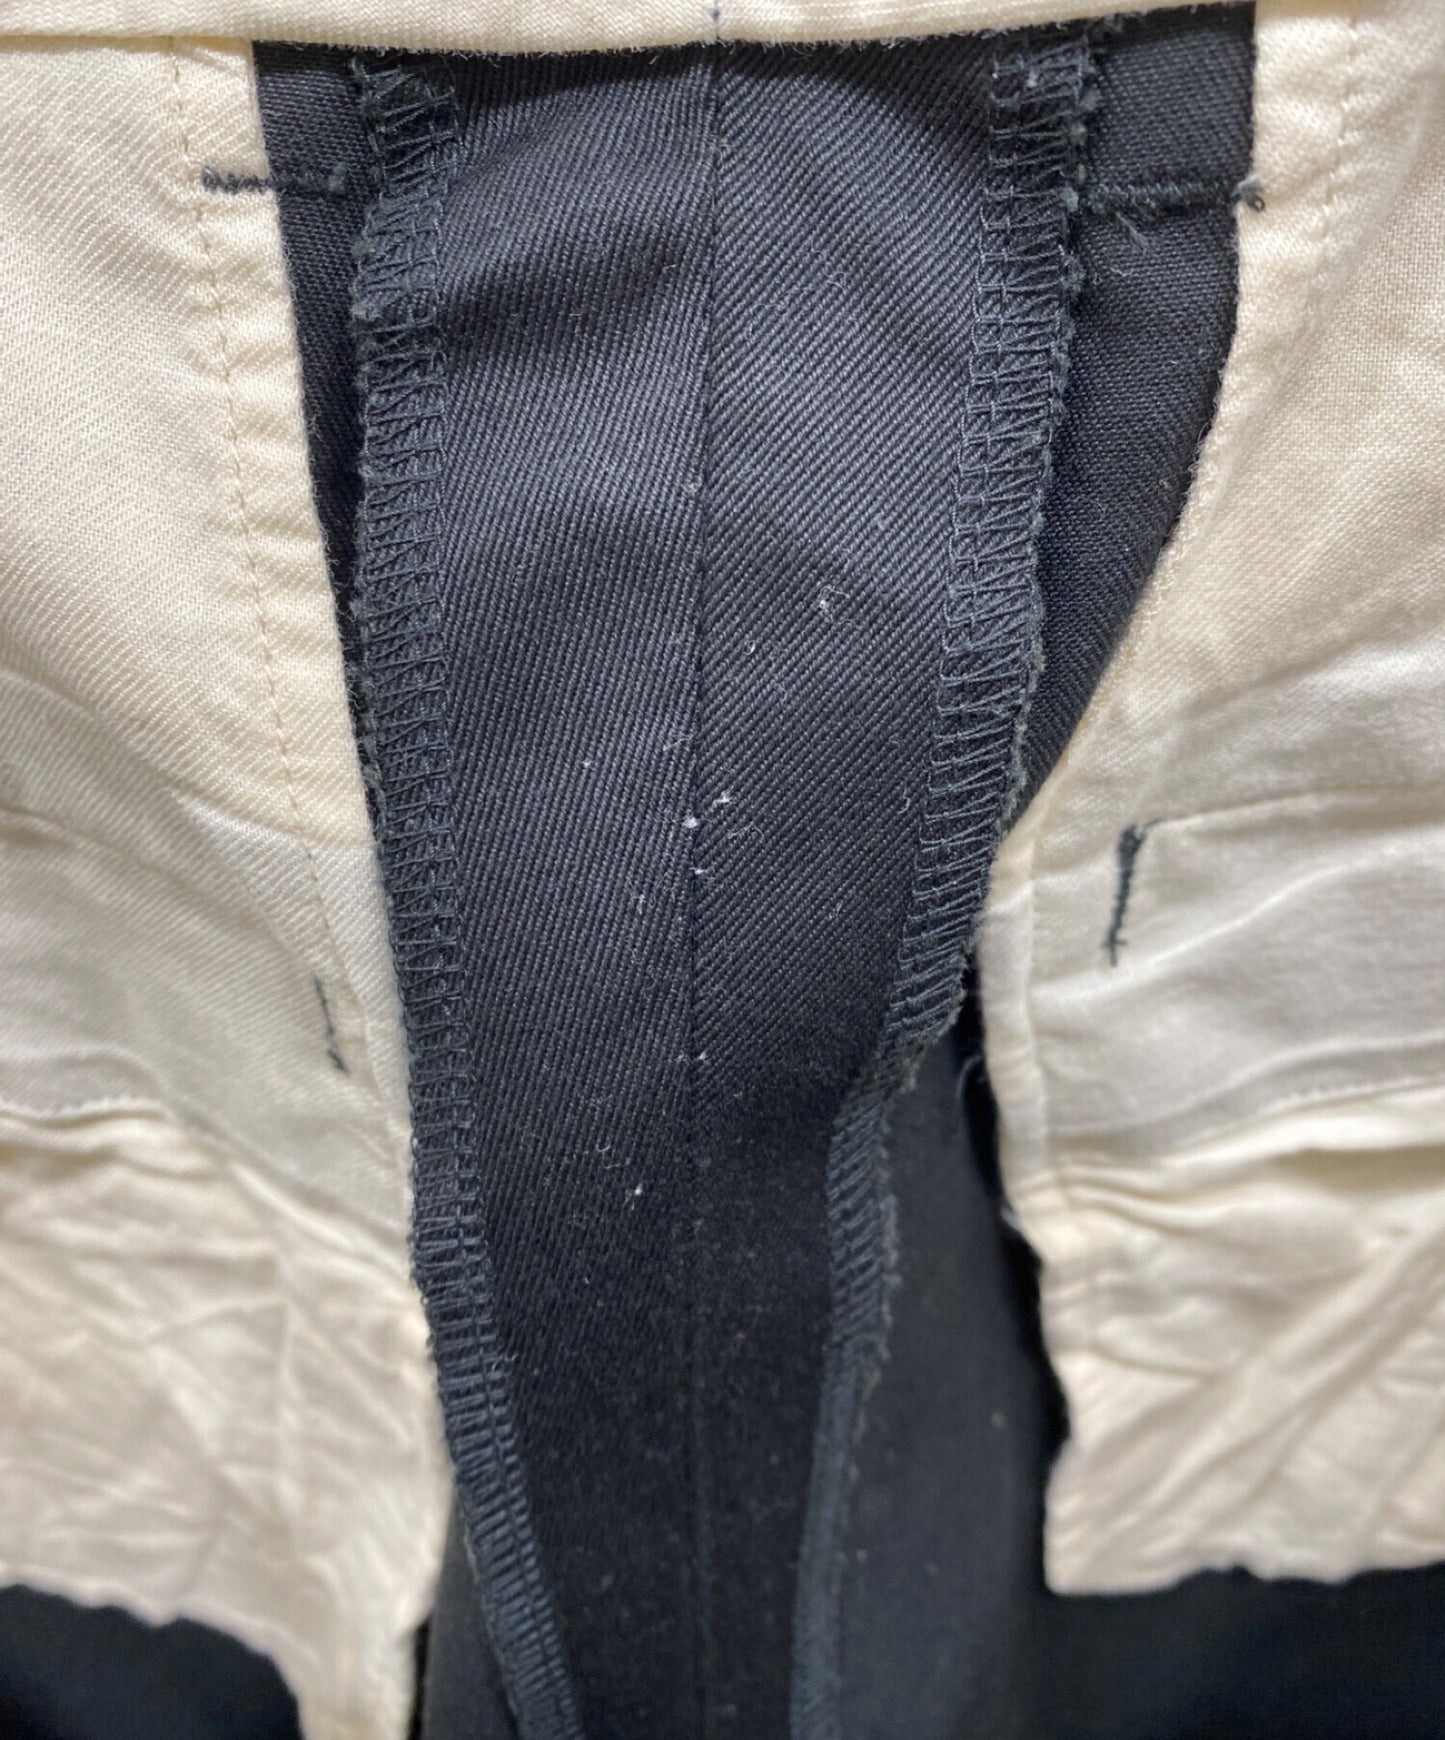 [Pre-owned] WACKO MARIA two-tuck pants